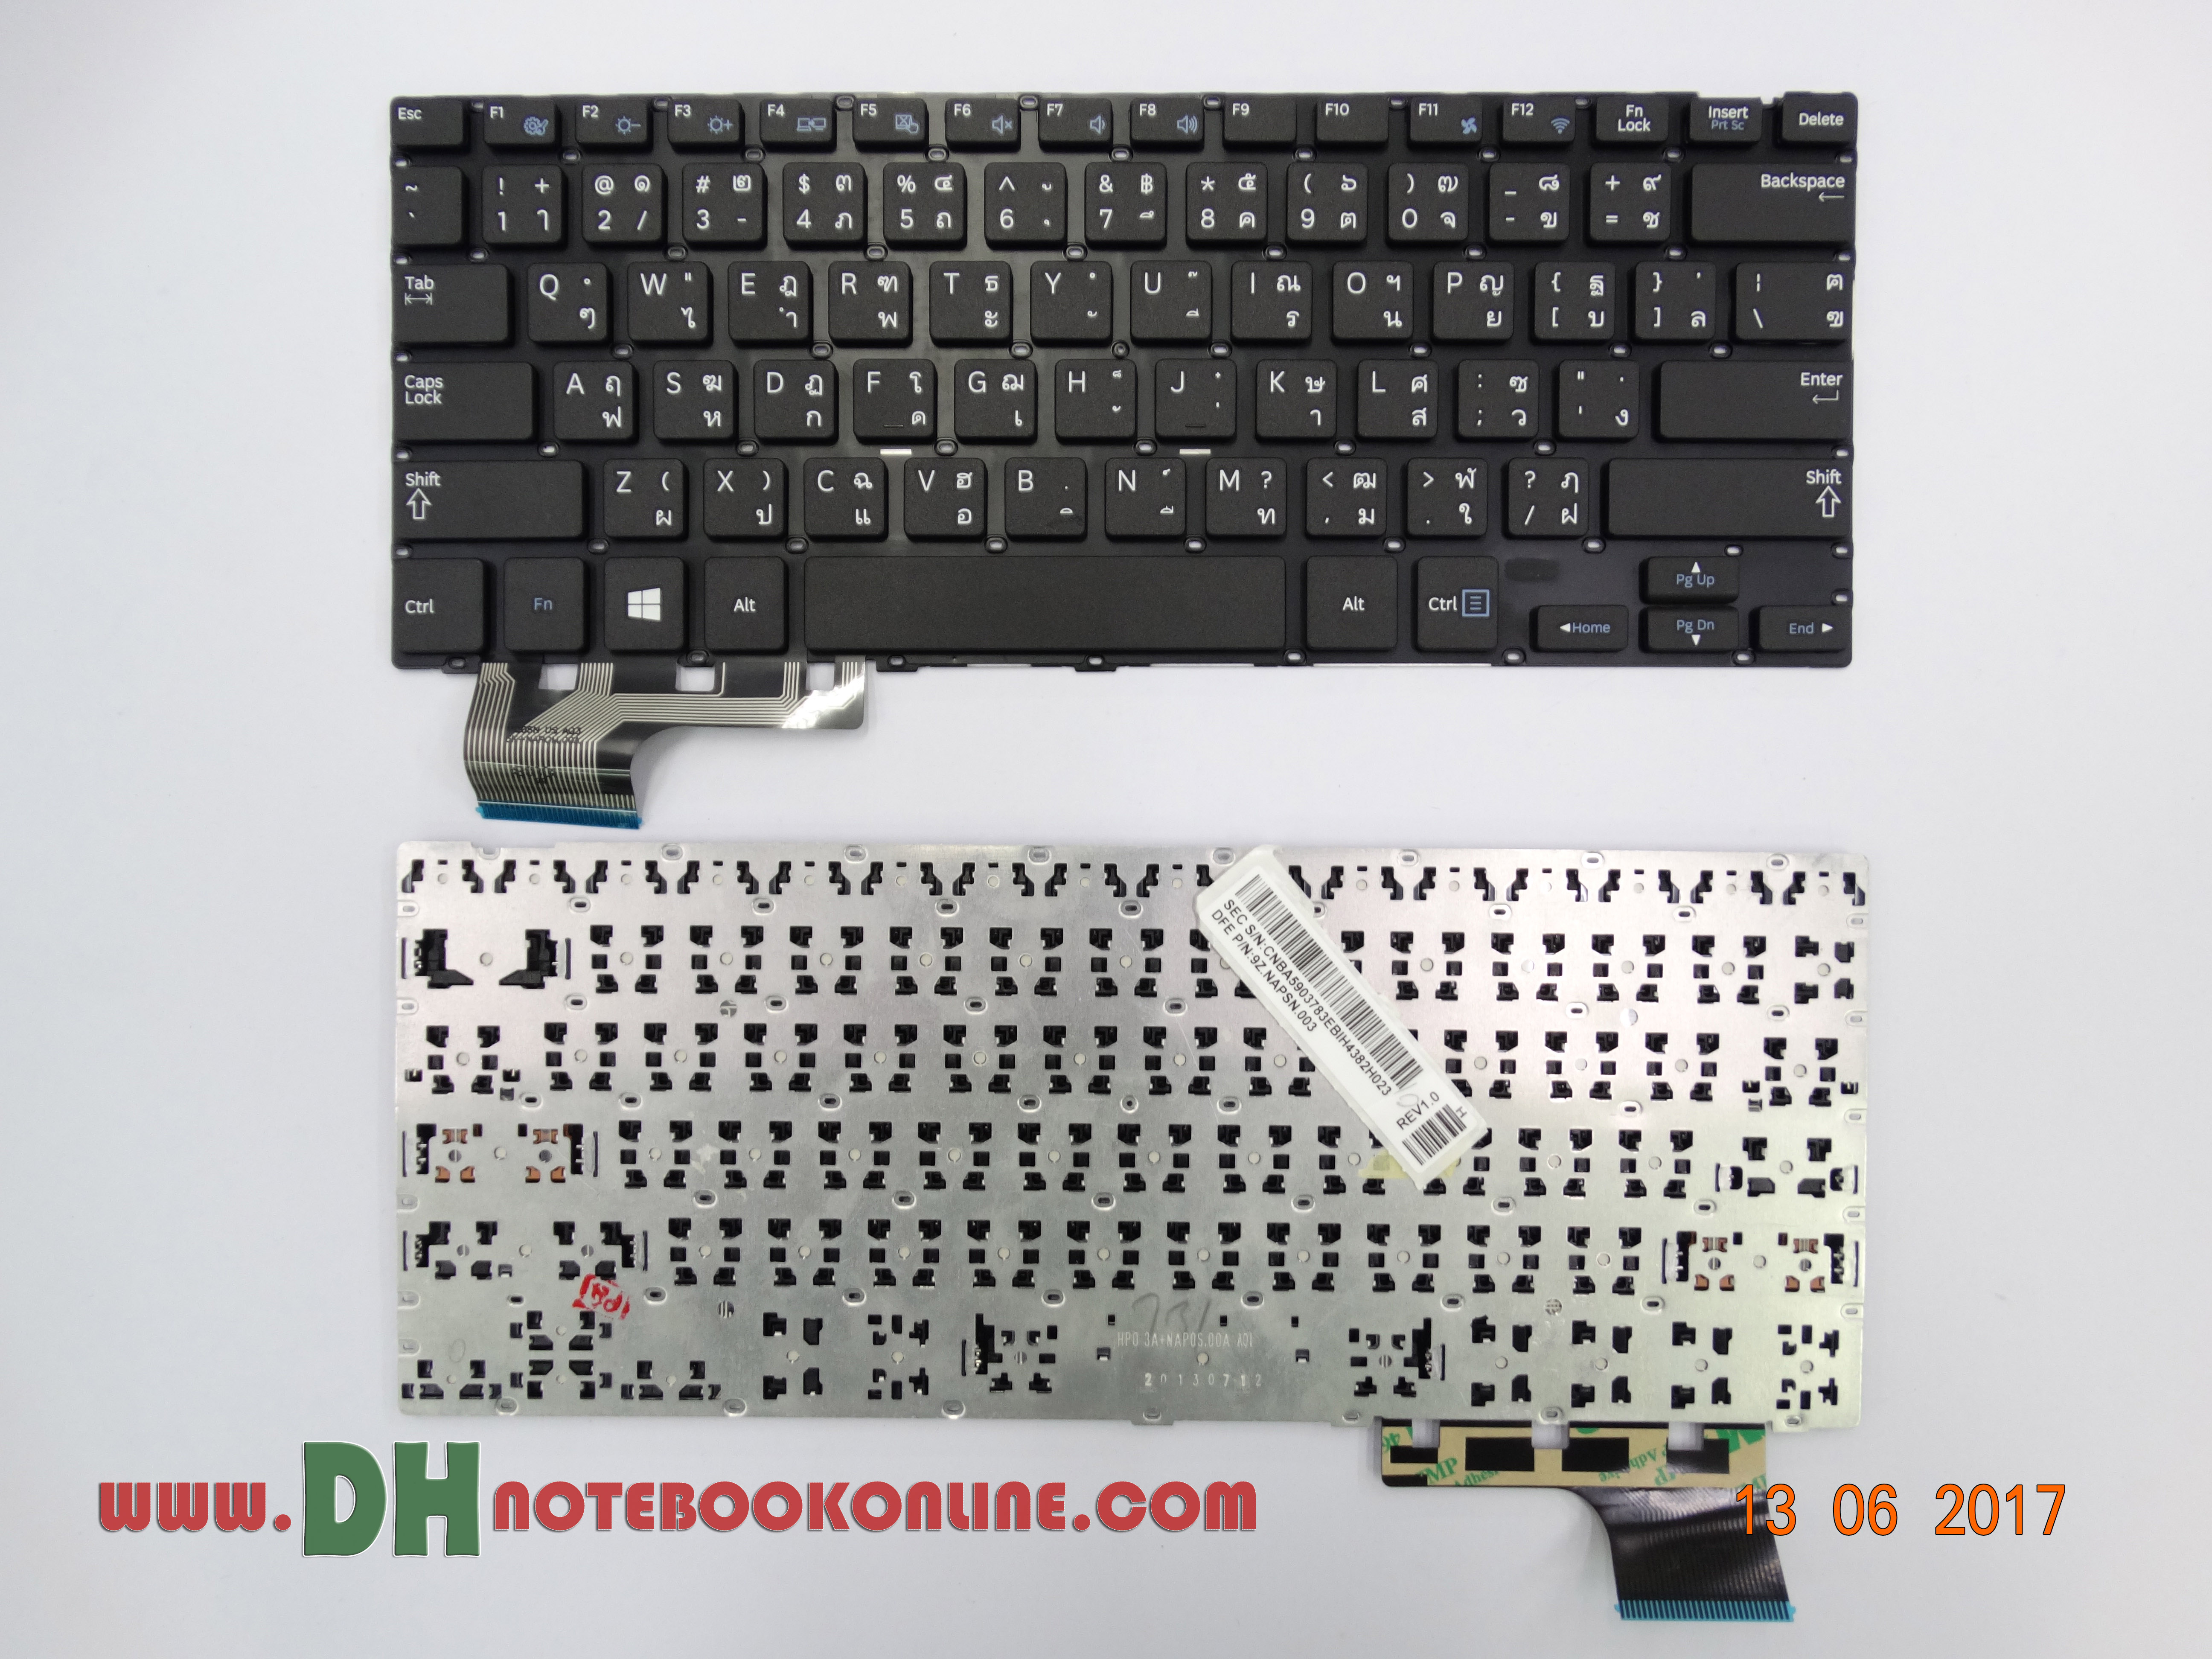 Samsung NP740 Keyboard